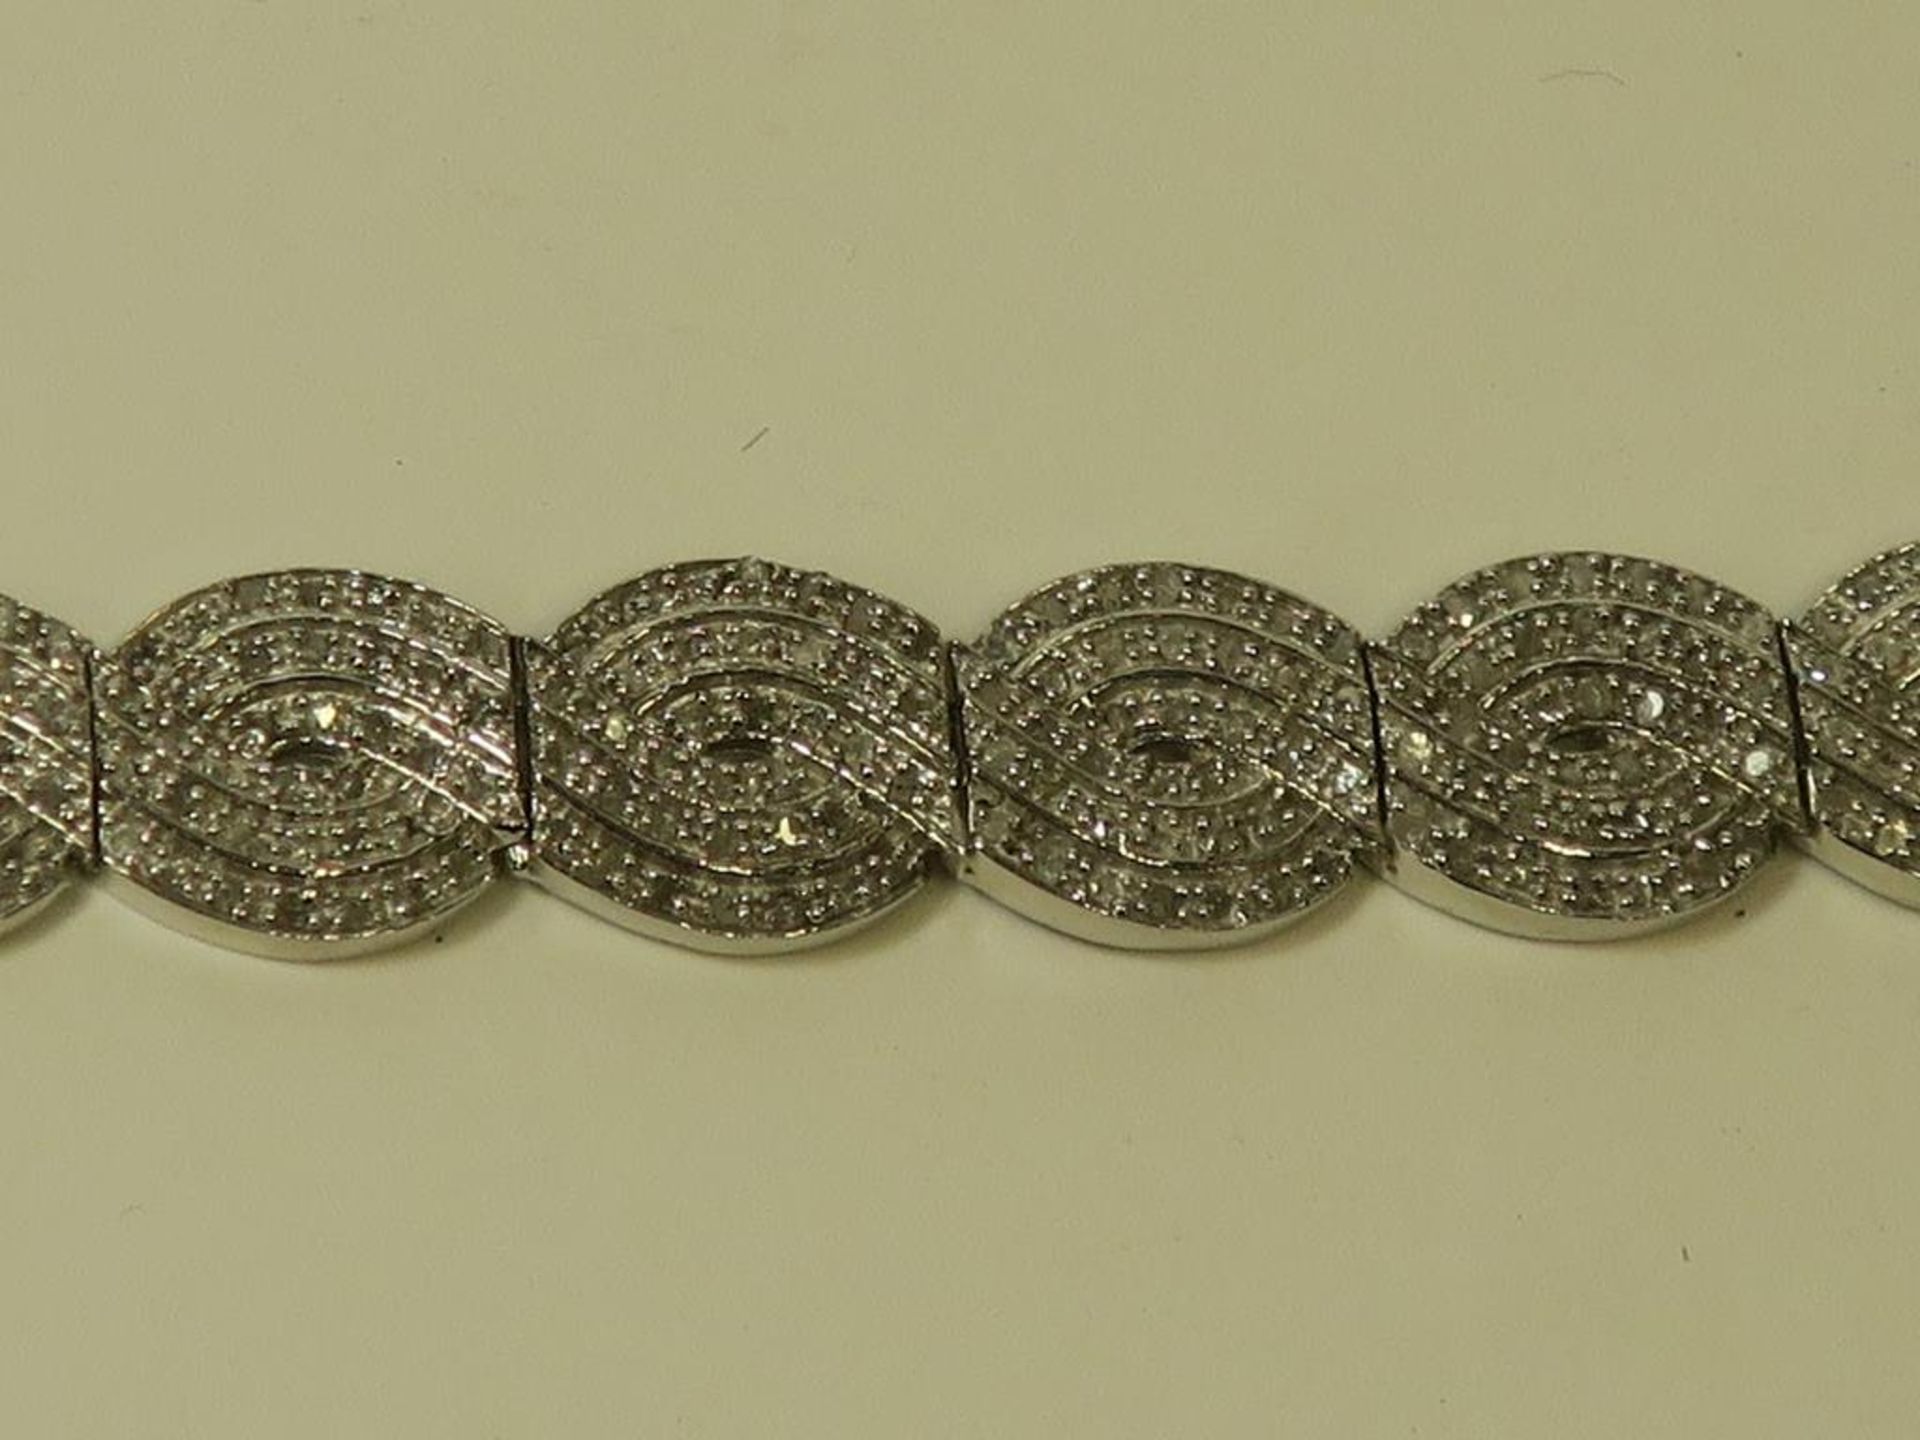 A Multi Diamond Encrusted Bracelet (approx 460 diamonds - approx 4.5 carats total) (est £200-£400) - Image 4 of 5